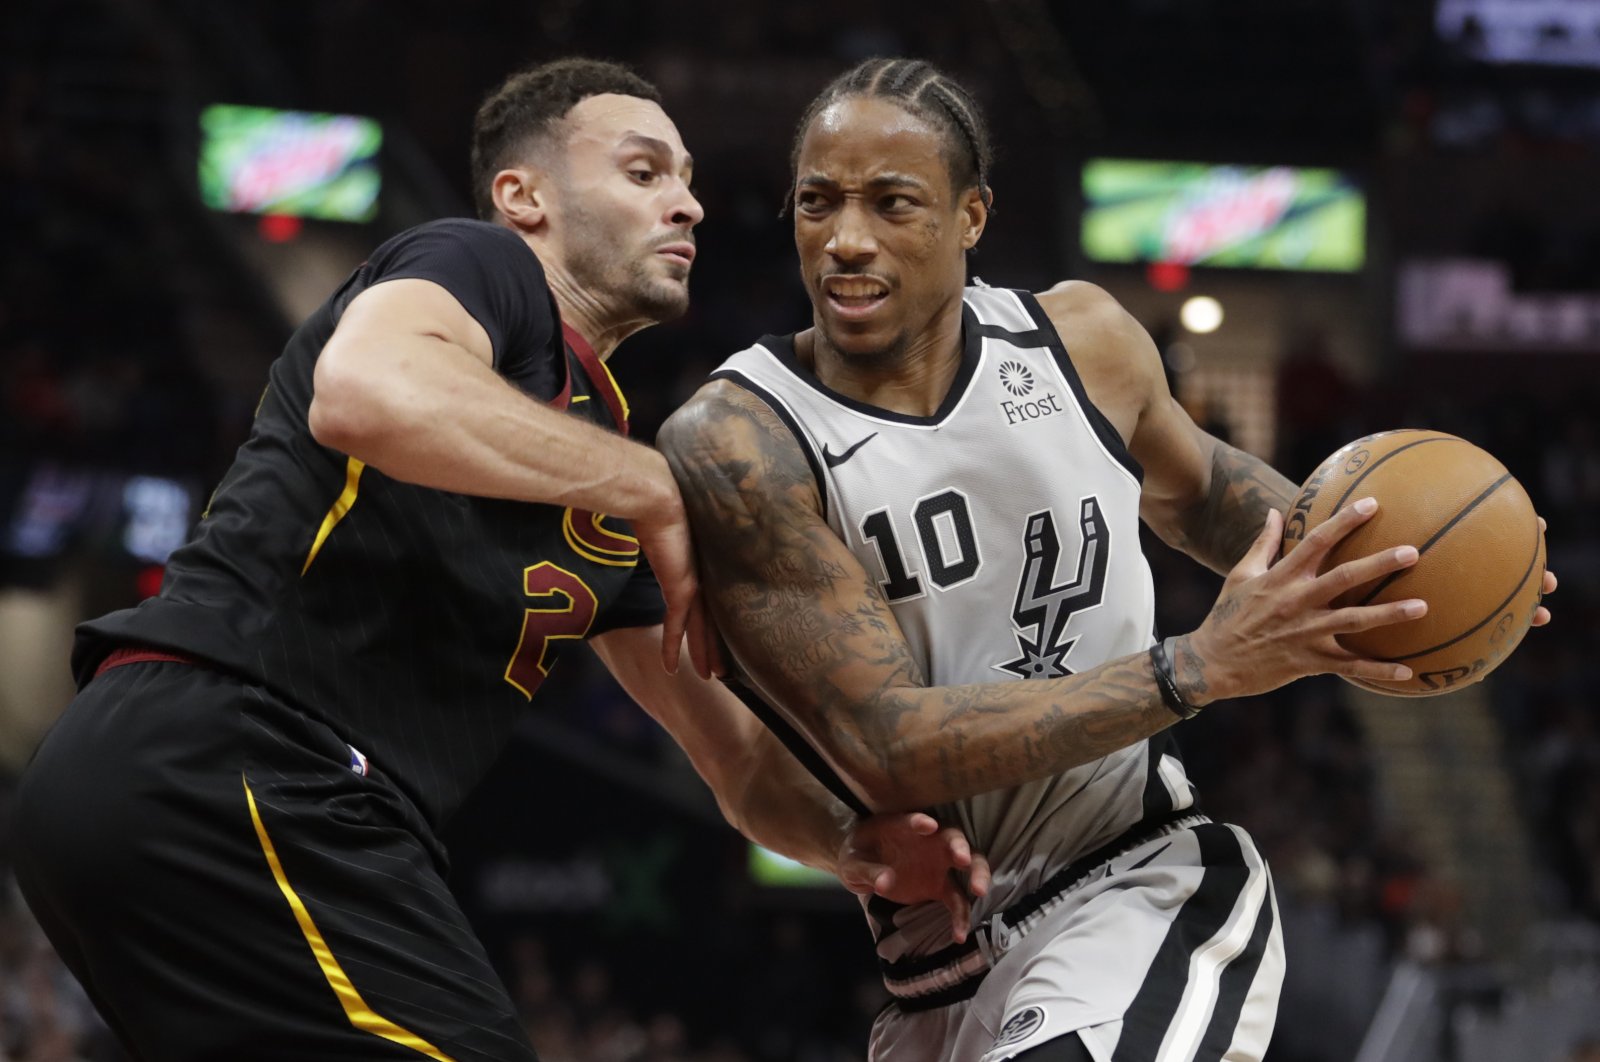 San Antonio Spurs' DeMar DeRozan (10) drives past Cleveland Cavaliers' Larry Nance Jr. (22) during an NBA game in Cleveland, U.S., March 8, 2020. (AP Photo)